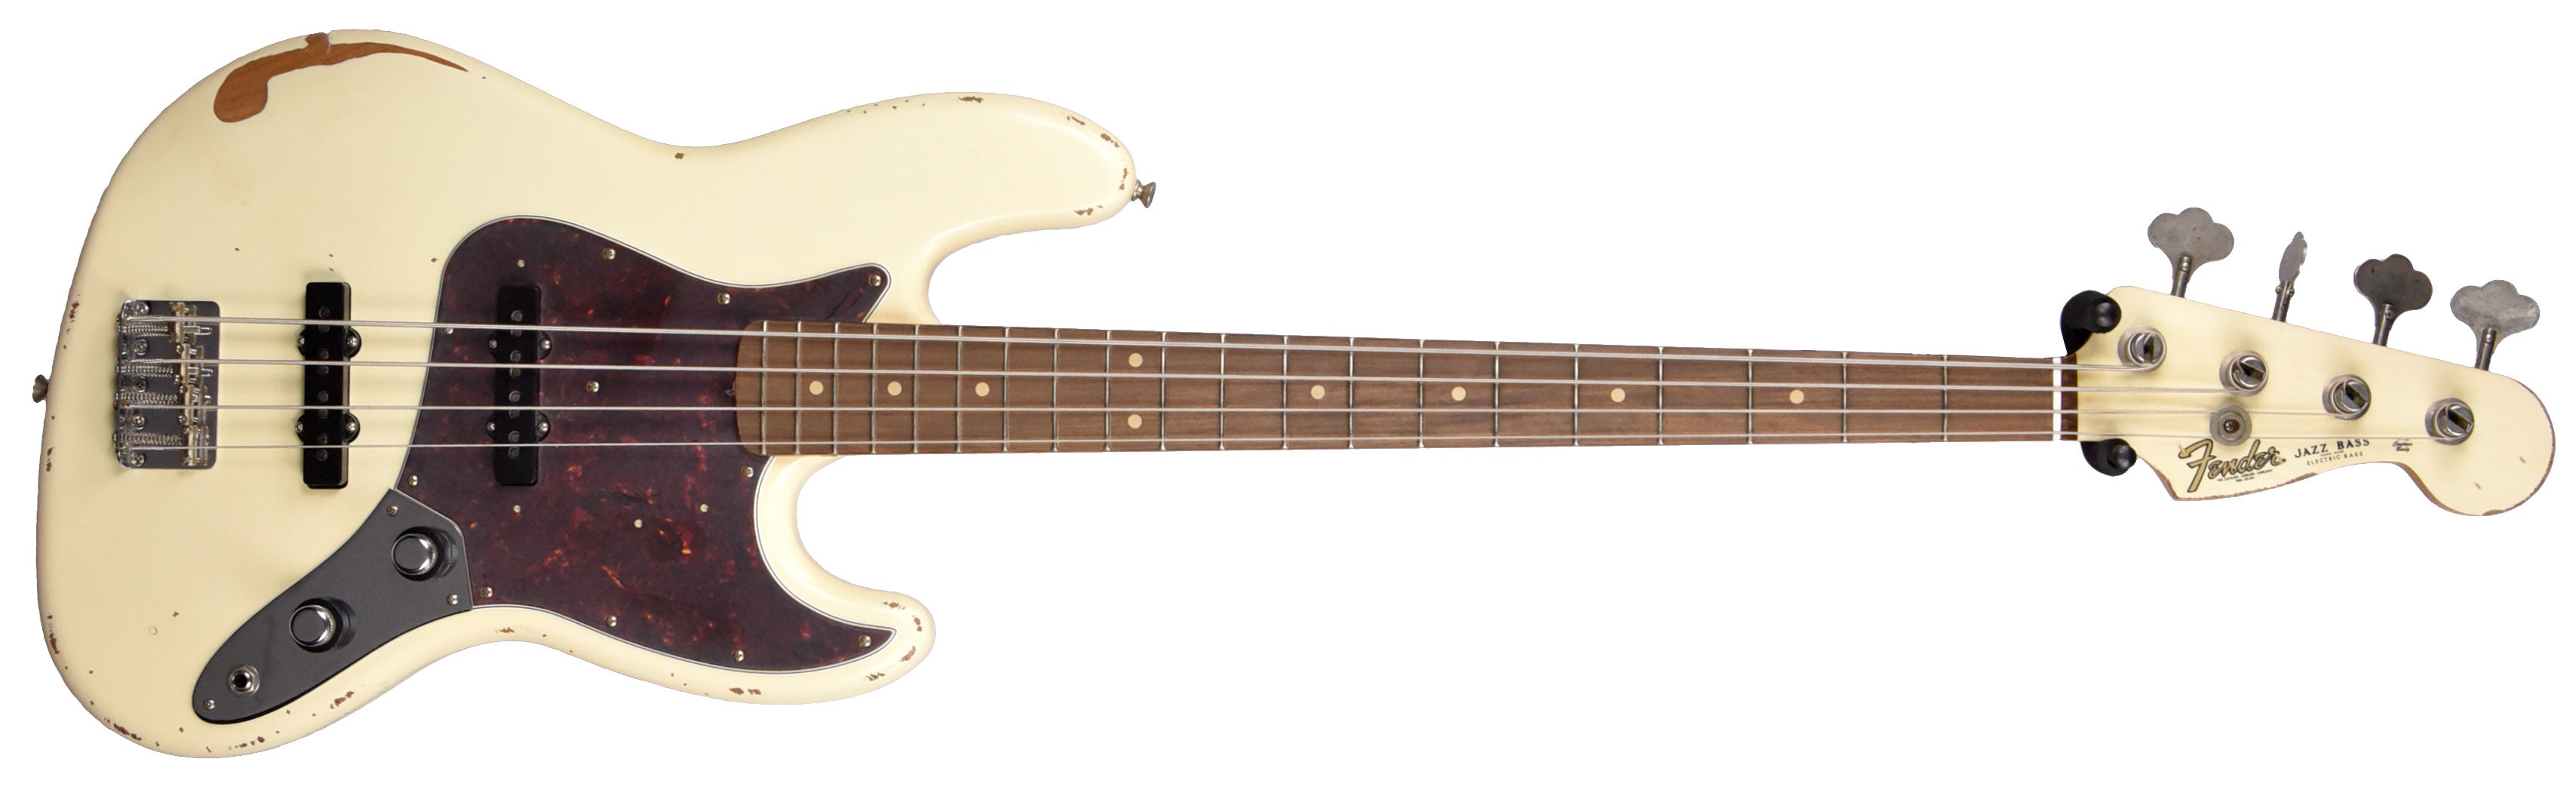 Fender 60th Anniversary Road Worn Jazz Bass in Olympic White MXJ01437